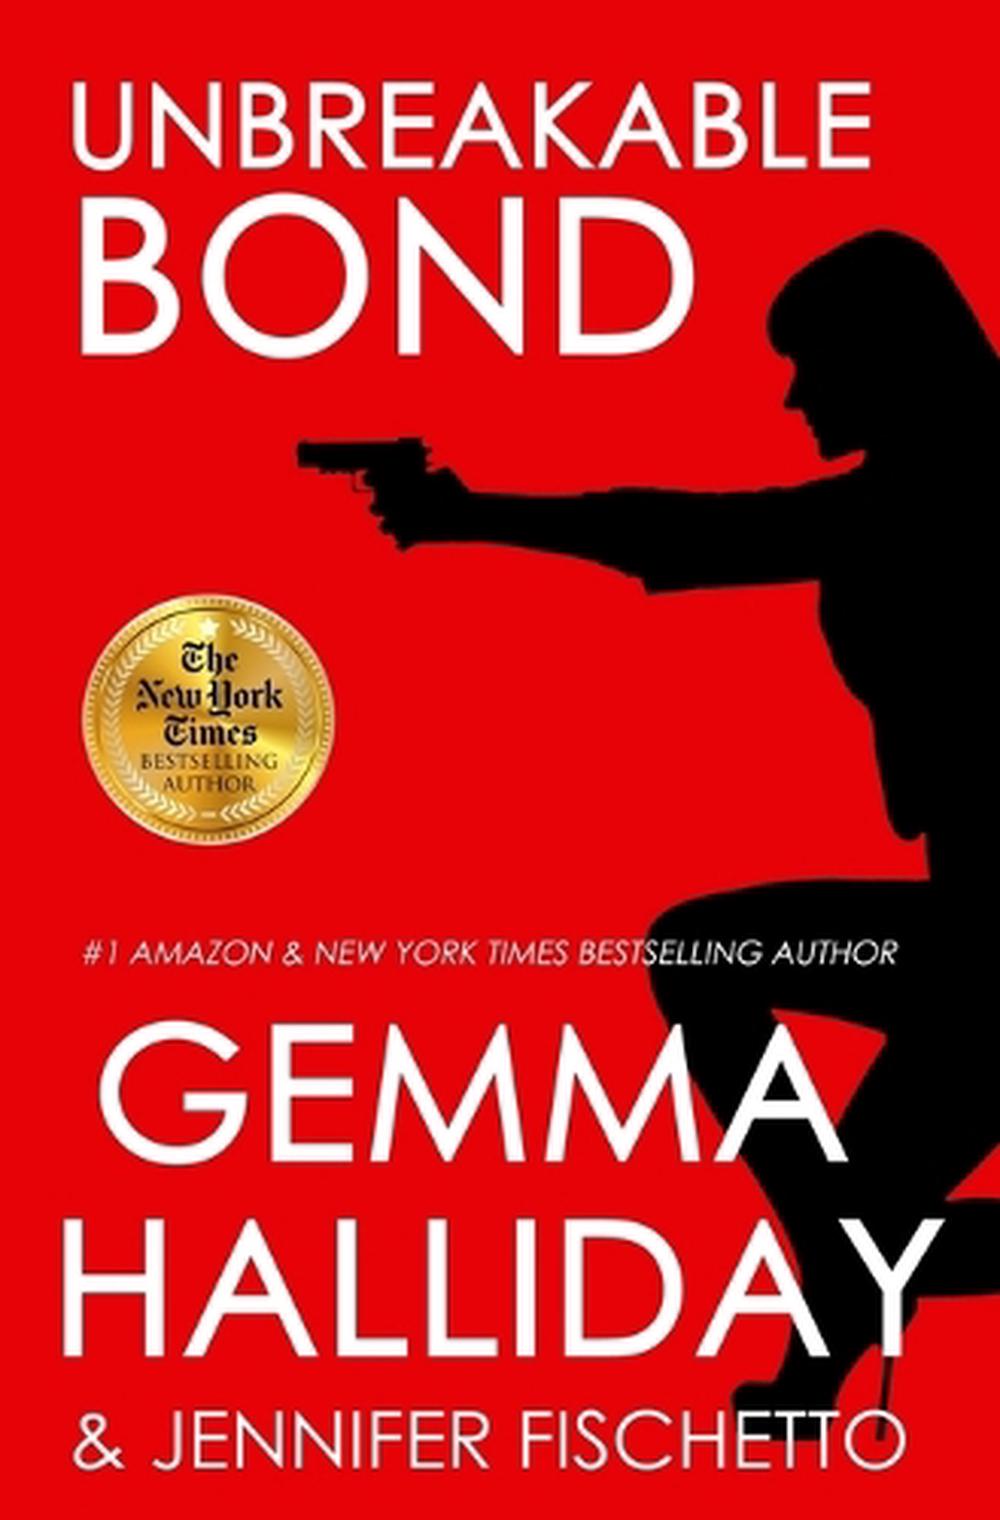 Unbreakable Bond by Gemma Halliday